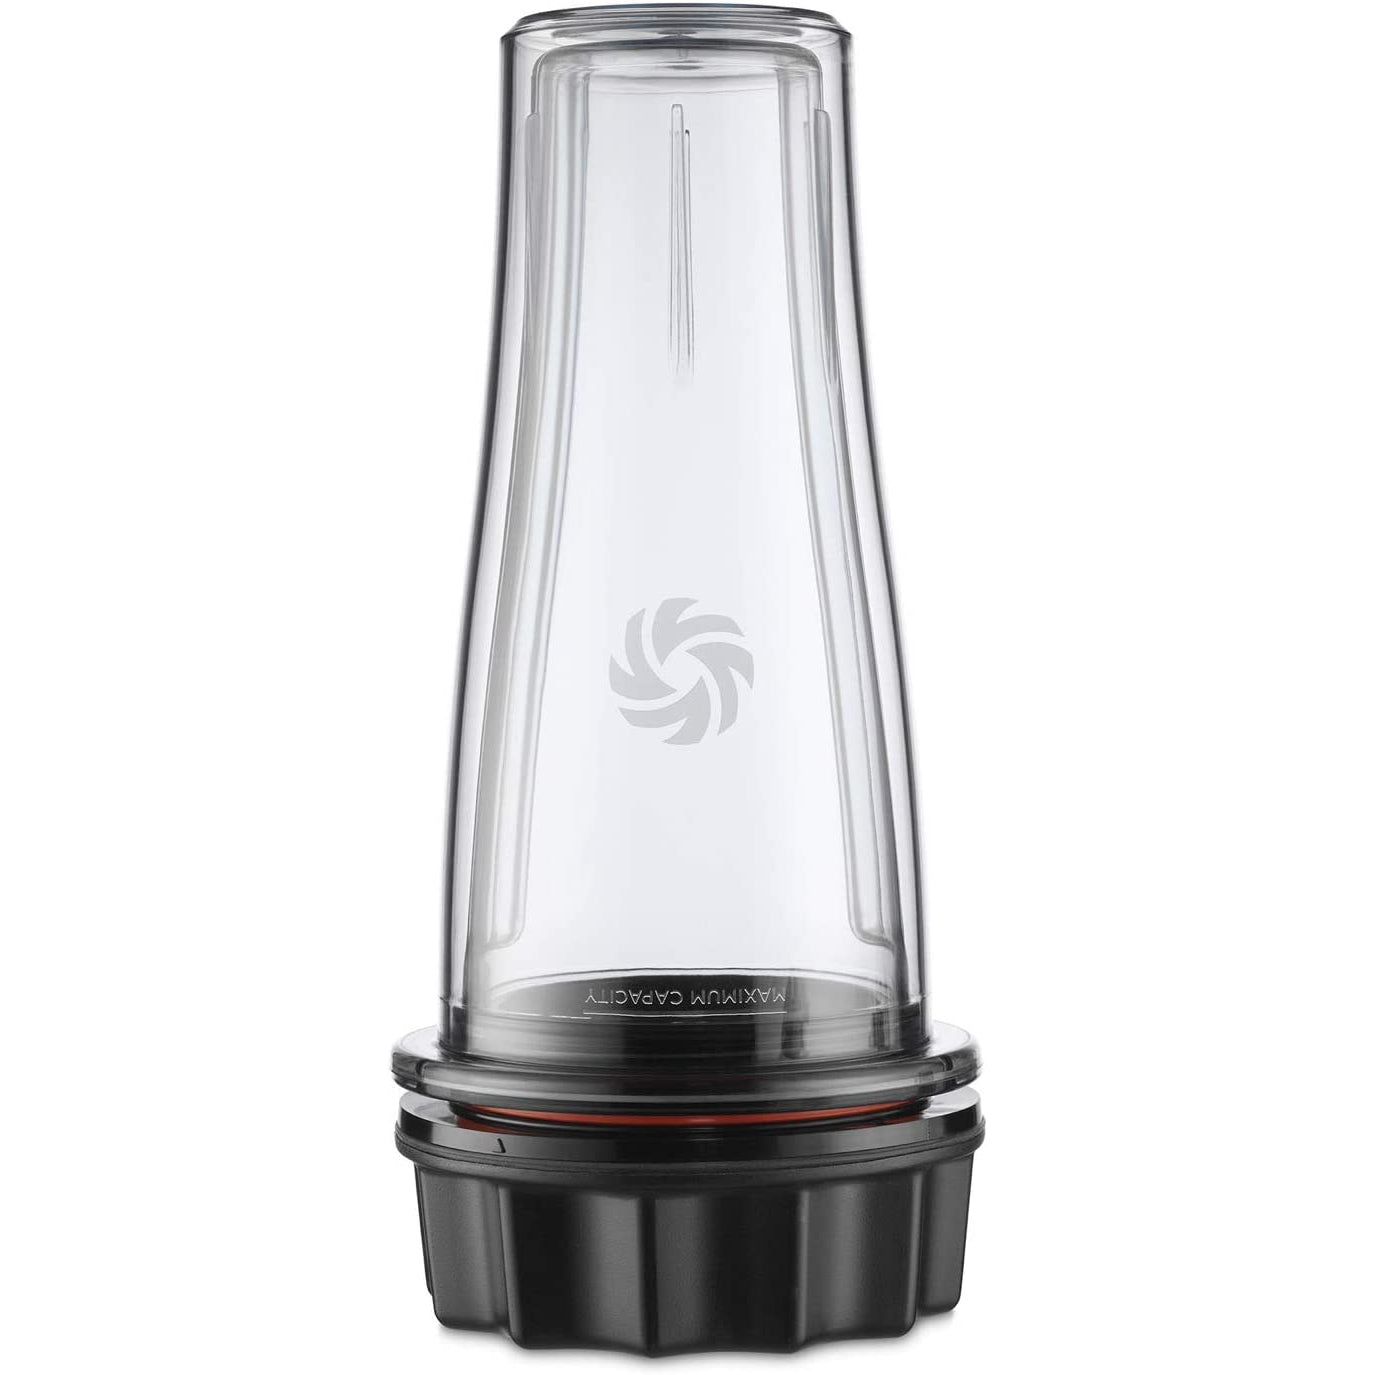 Vitamix Ascent Series Blending Cup Starter Kit, 600ml - New